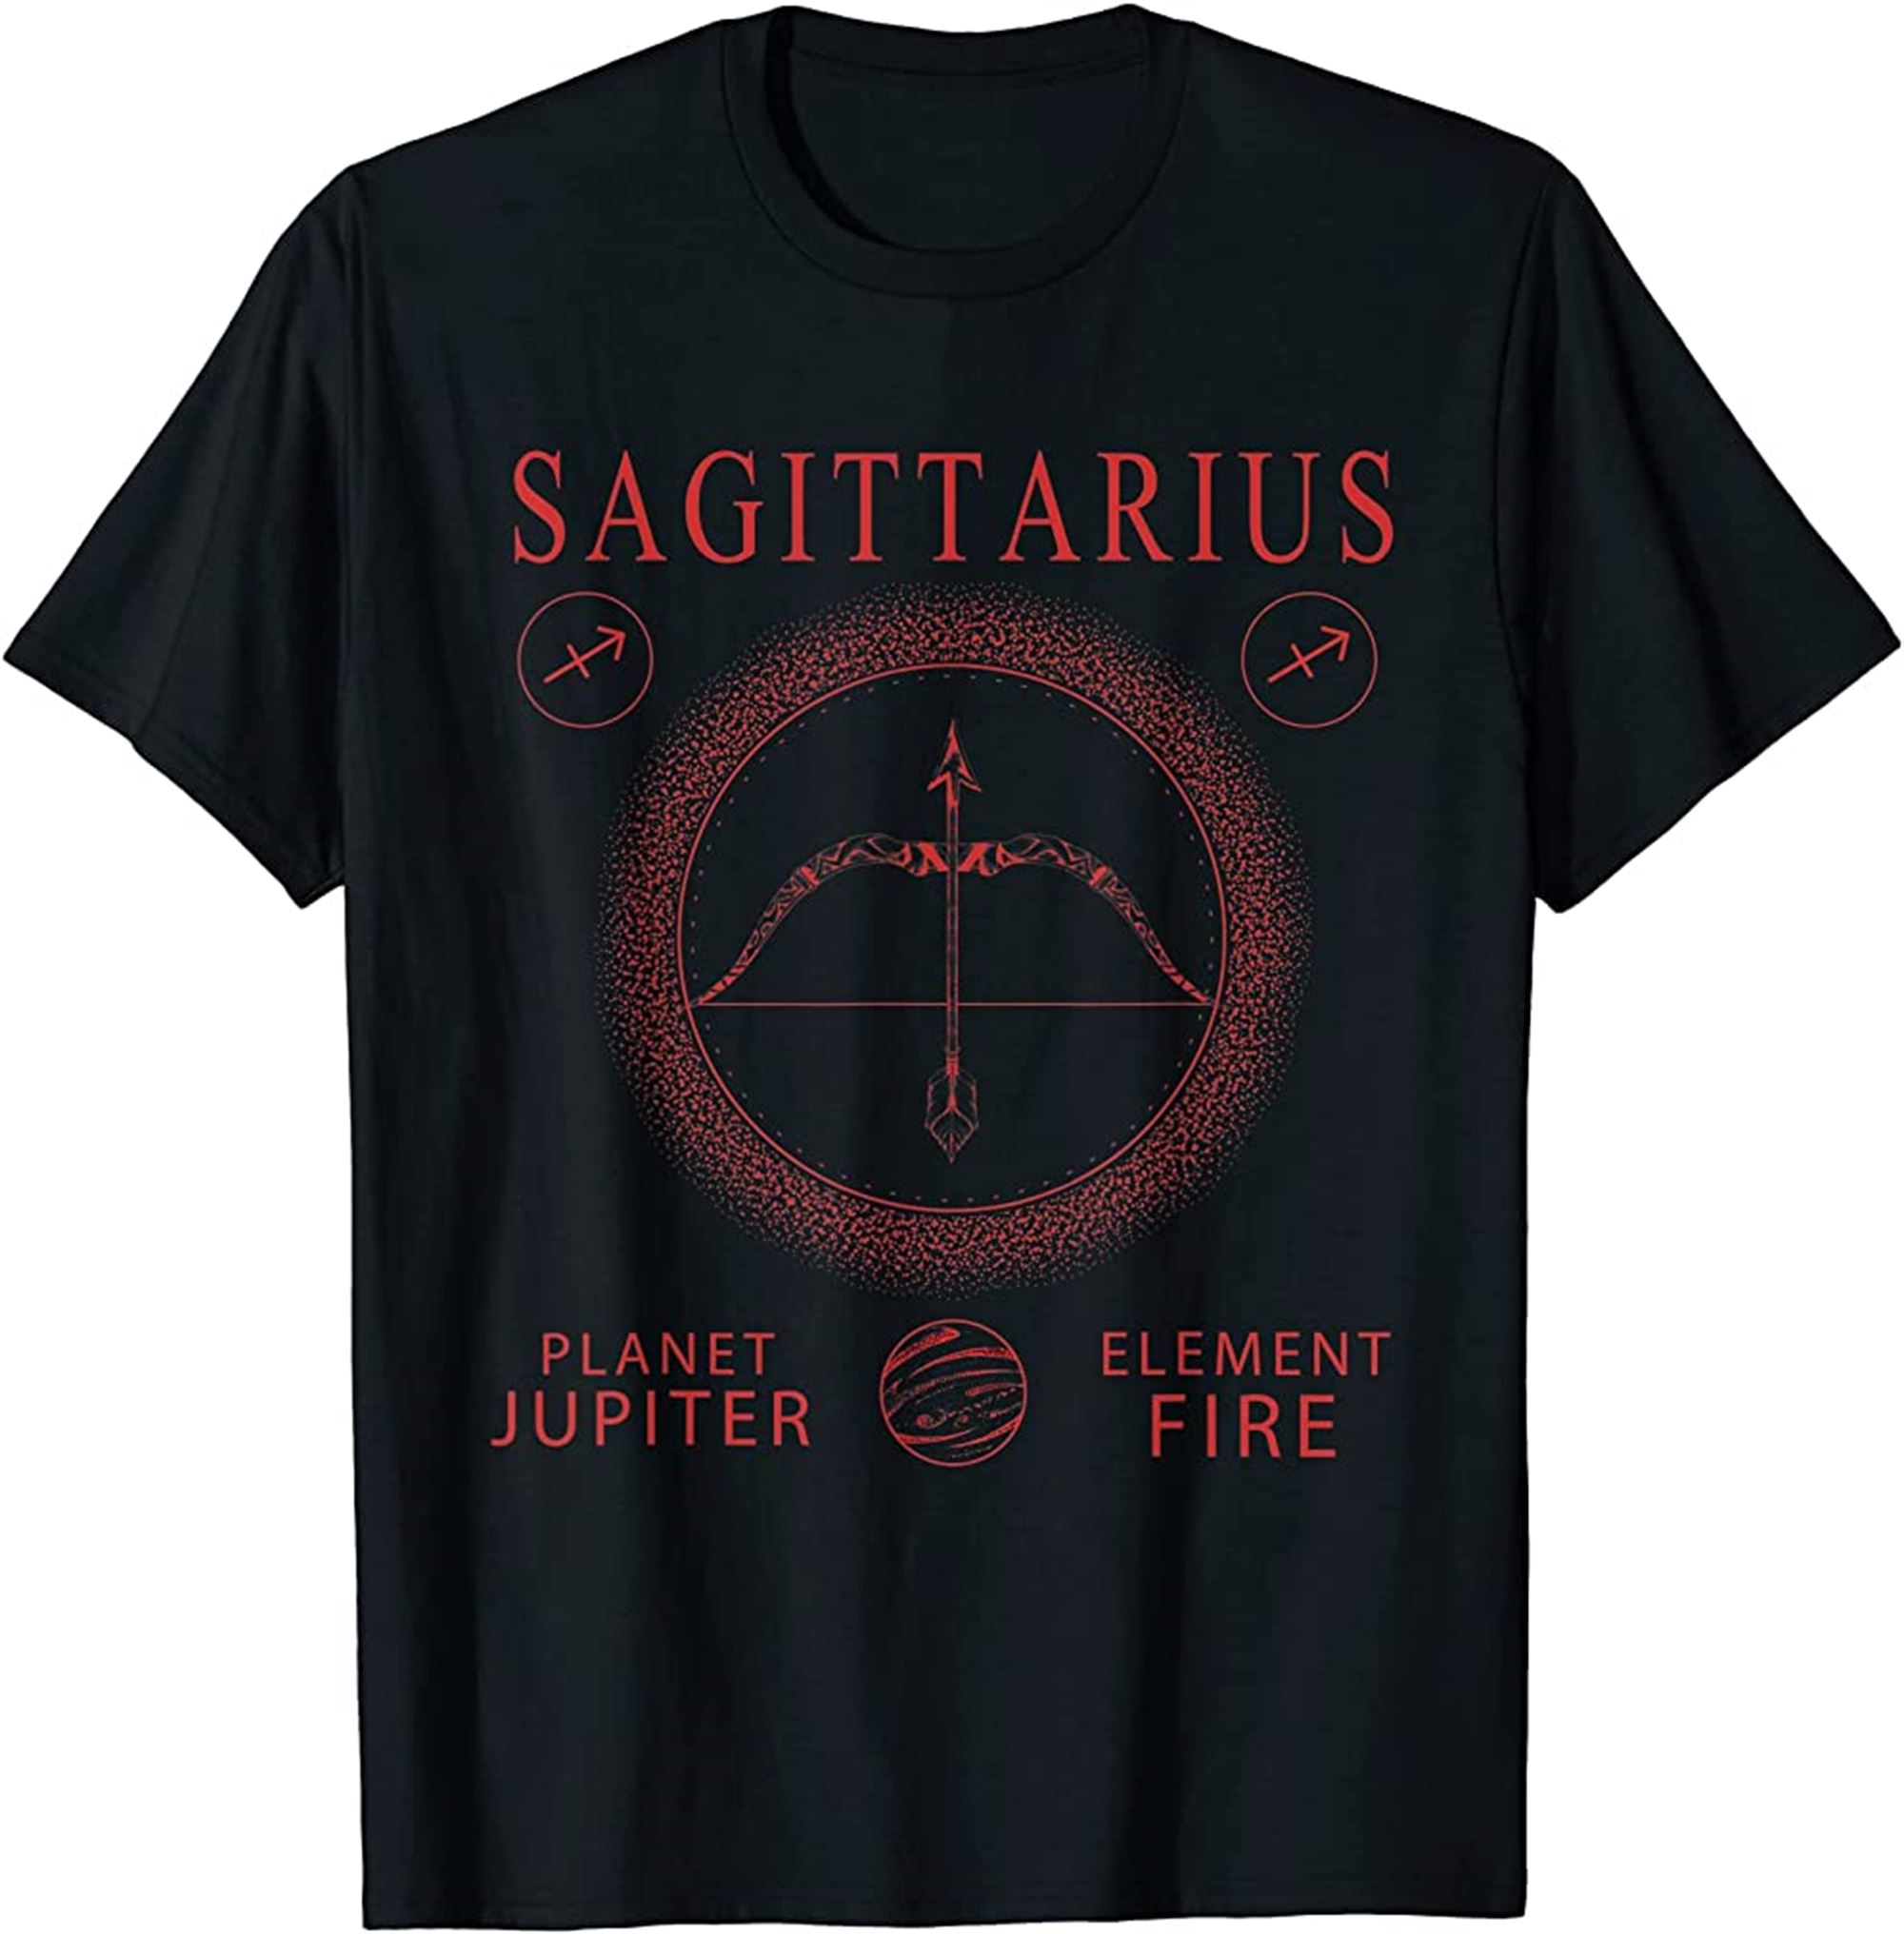 Sagittarius Zodiac Sign T-shirt Plus Size Up To 5xl